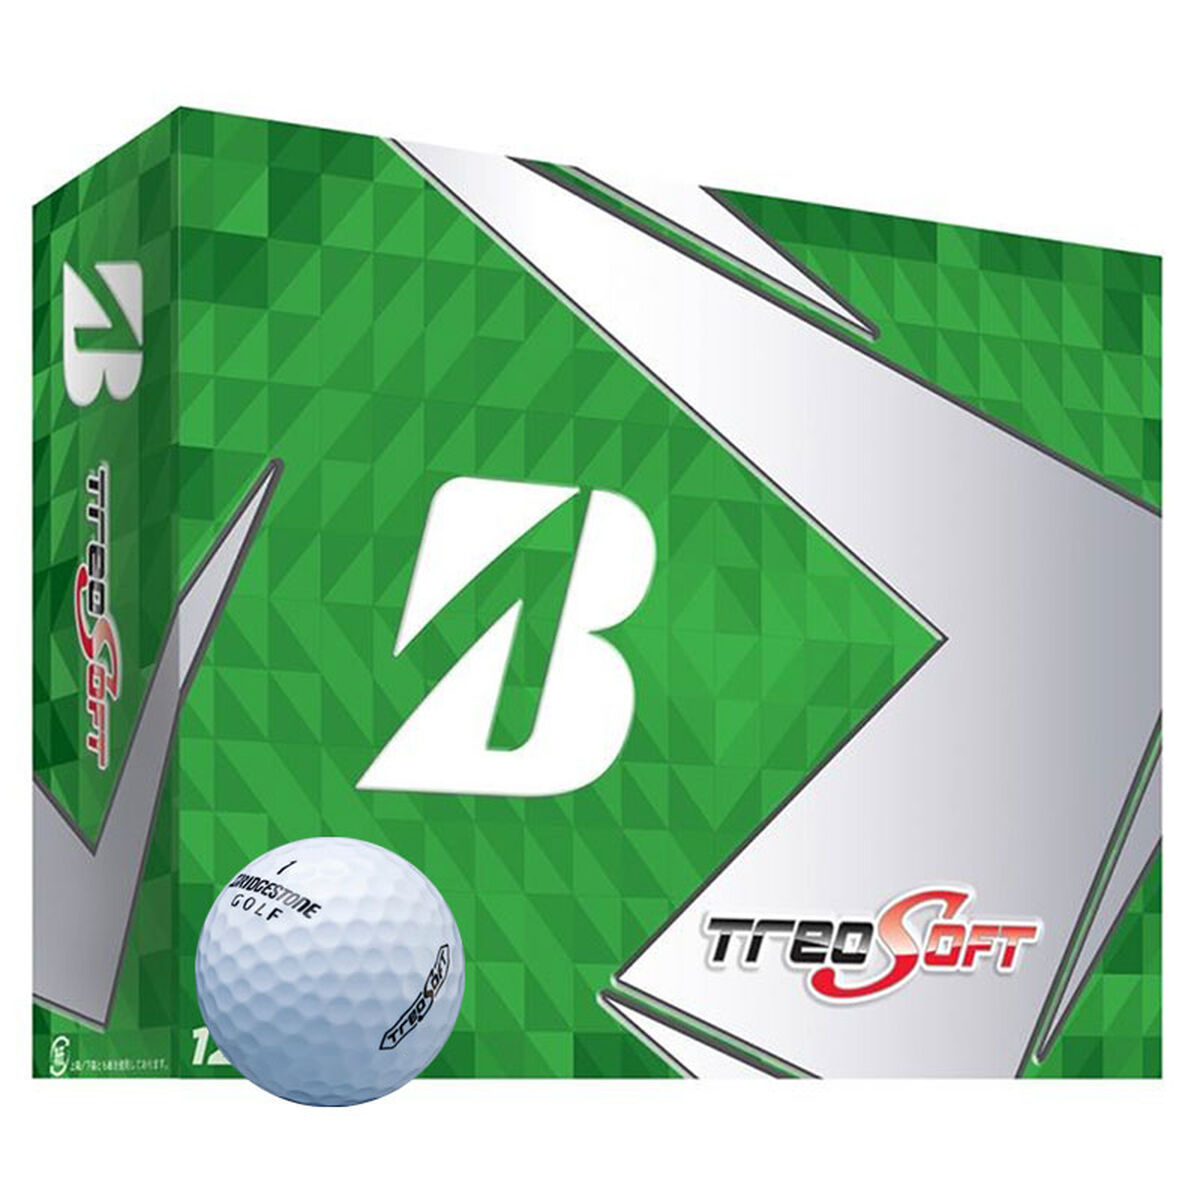 Bridgestone Golf Golf Ball, White Bridgestone TreoSoft 12 Pack | American Golf, one size